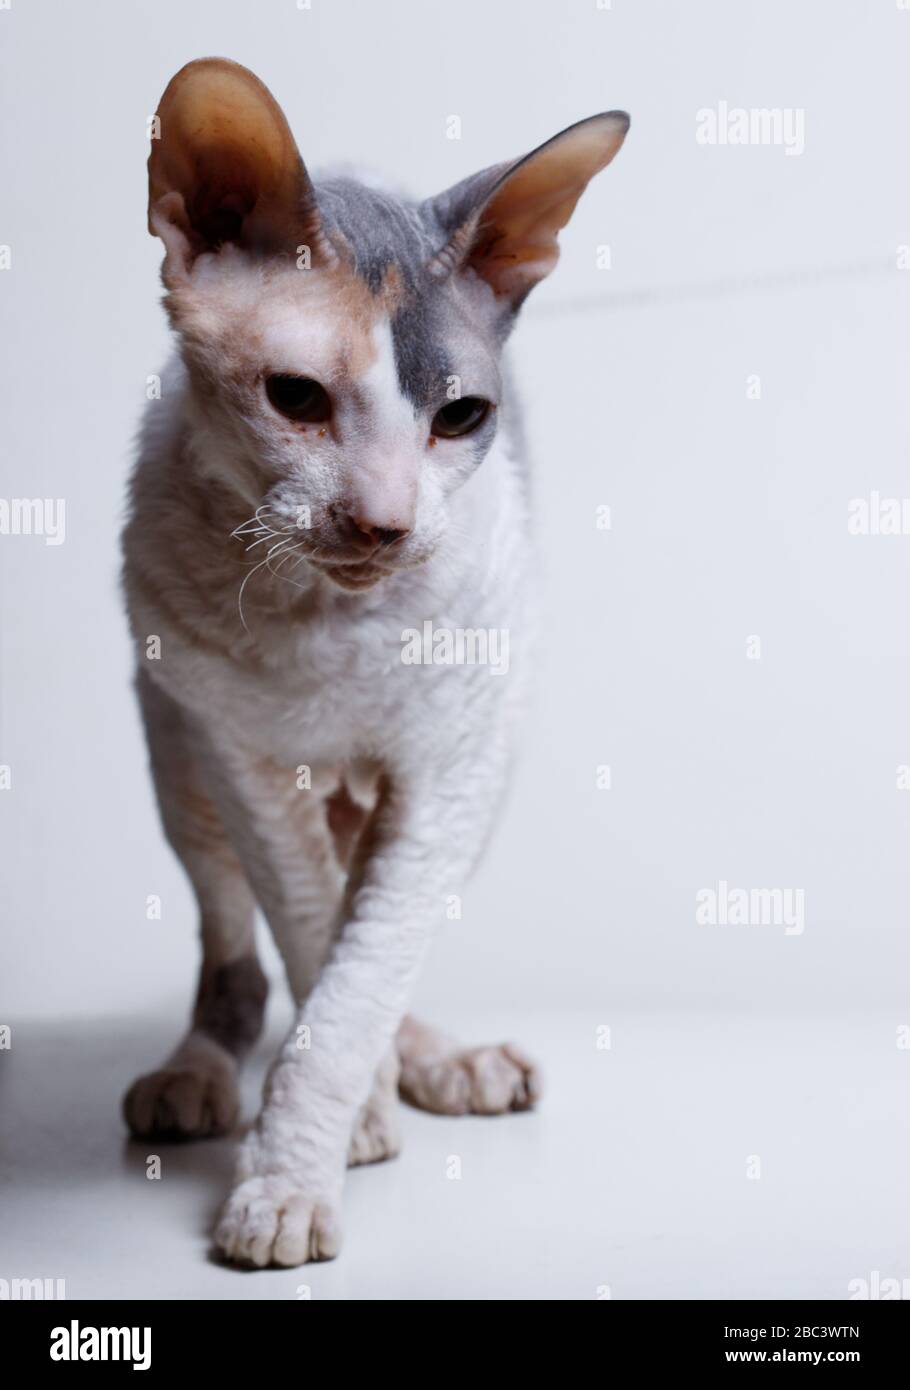 Cornish rex cat on a white background Stock Photo